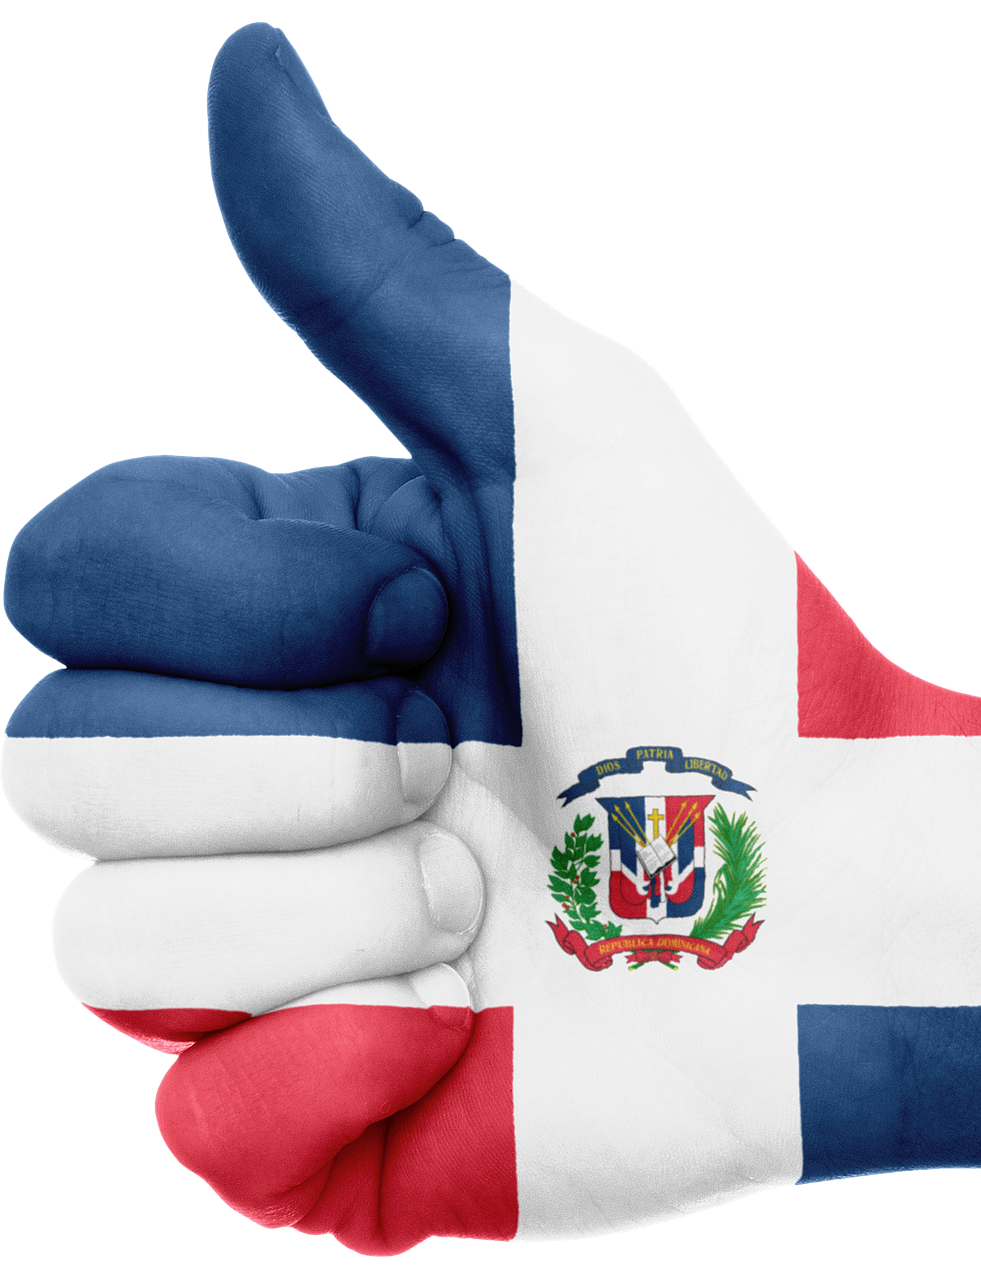 dominican republic flag hand free photo